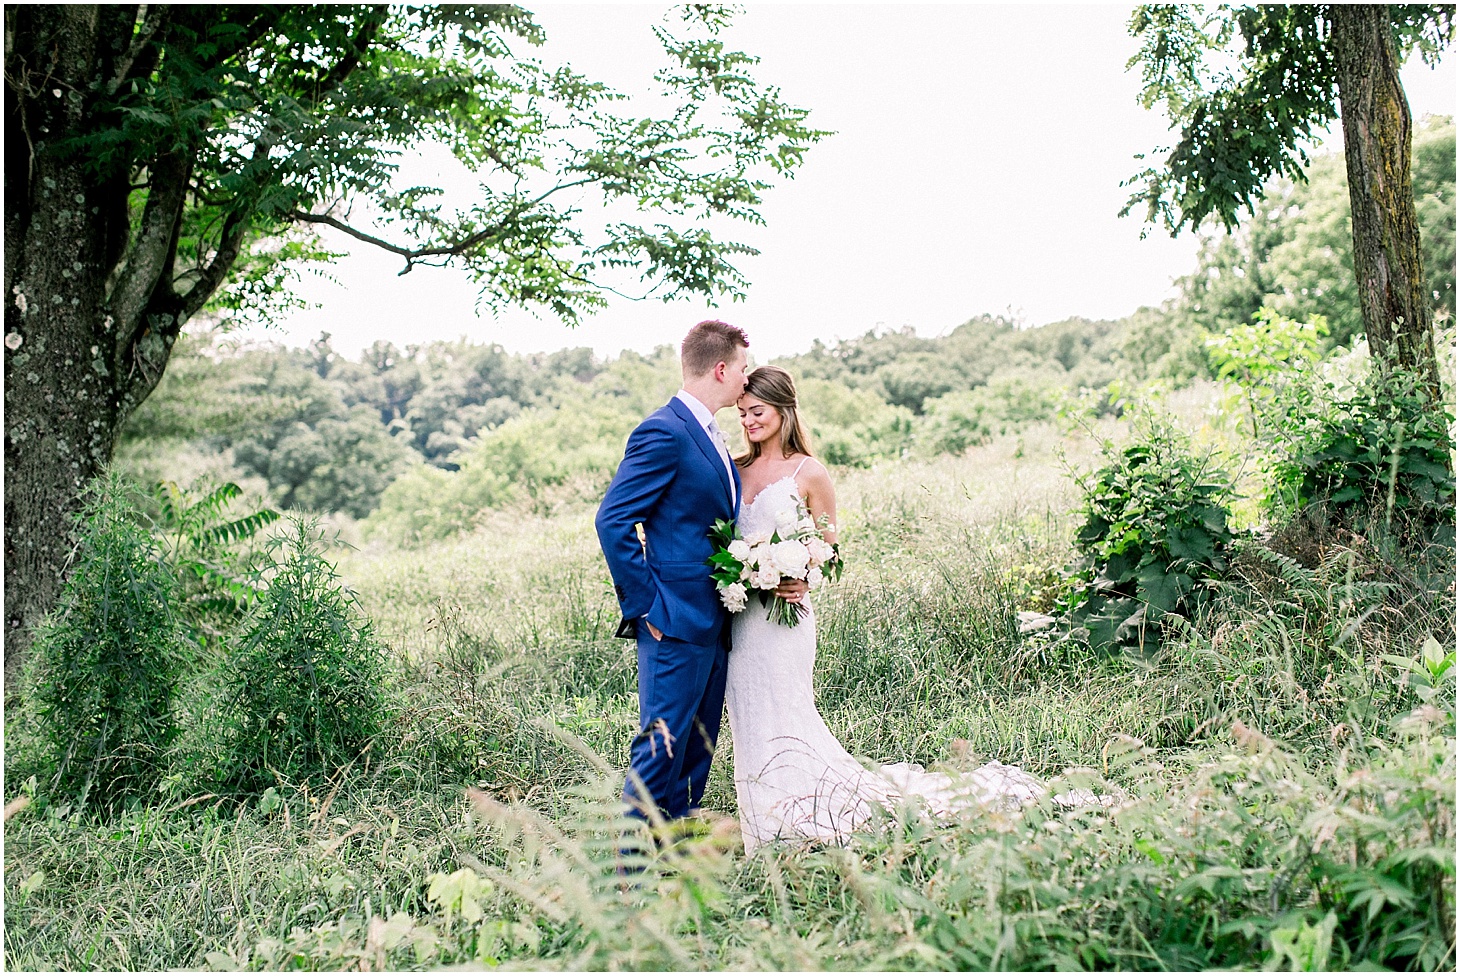 Romantic Outdoor Wedding Portraits | Chic Estate Wedding at Tranquility Farm | Nikki Santerre Destination Film Wedding Photography